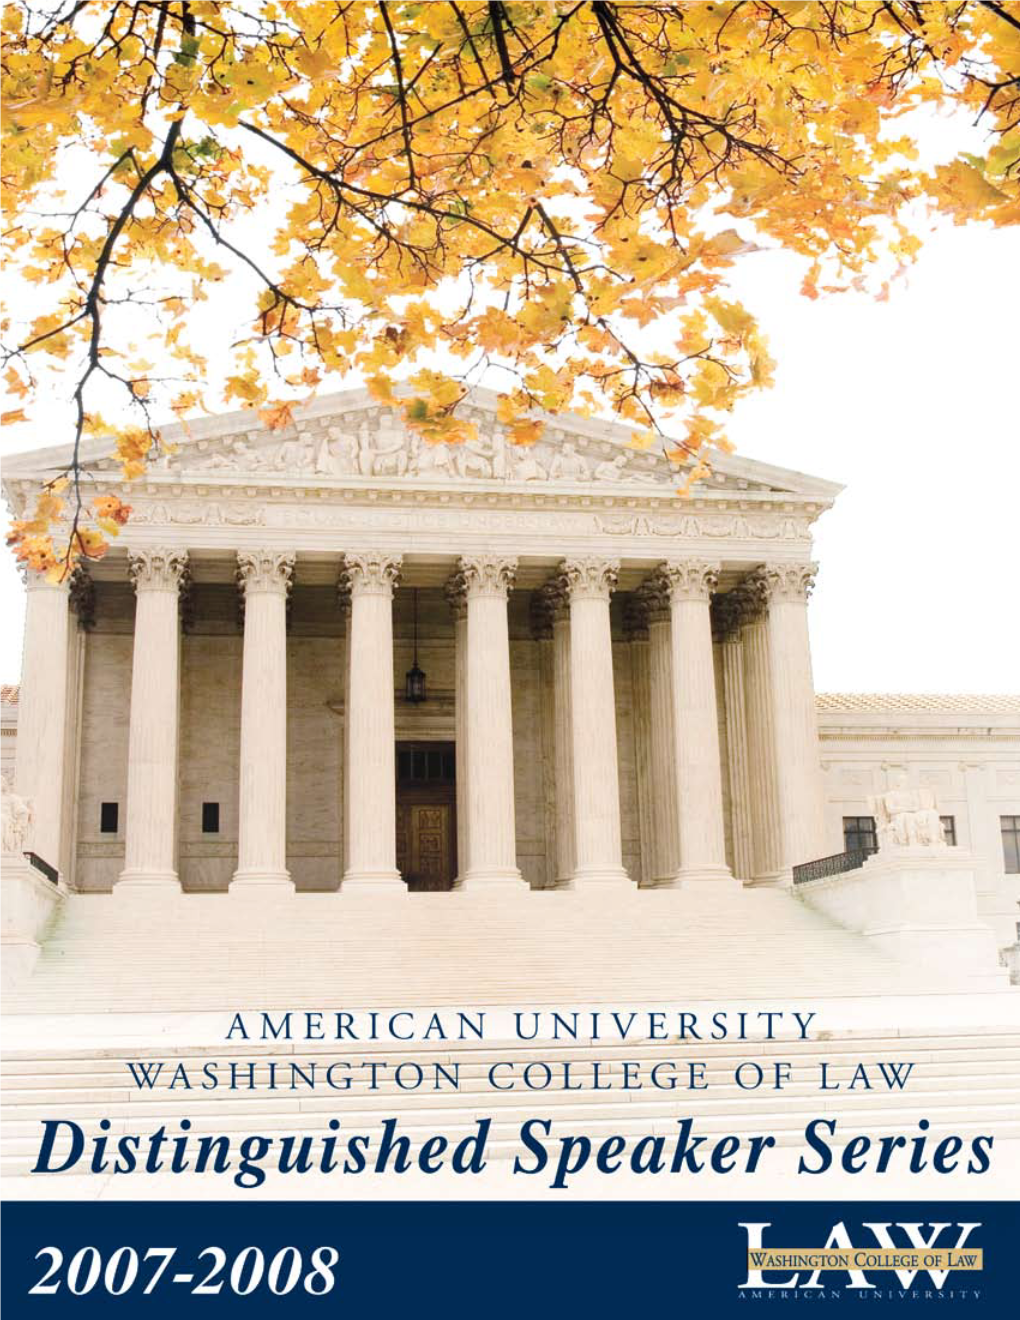 Washington College of Law 2007-2008 Speaker Series